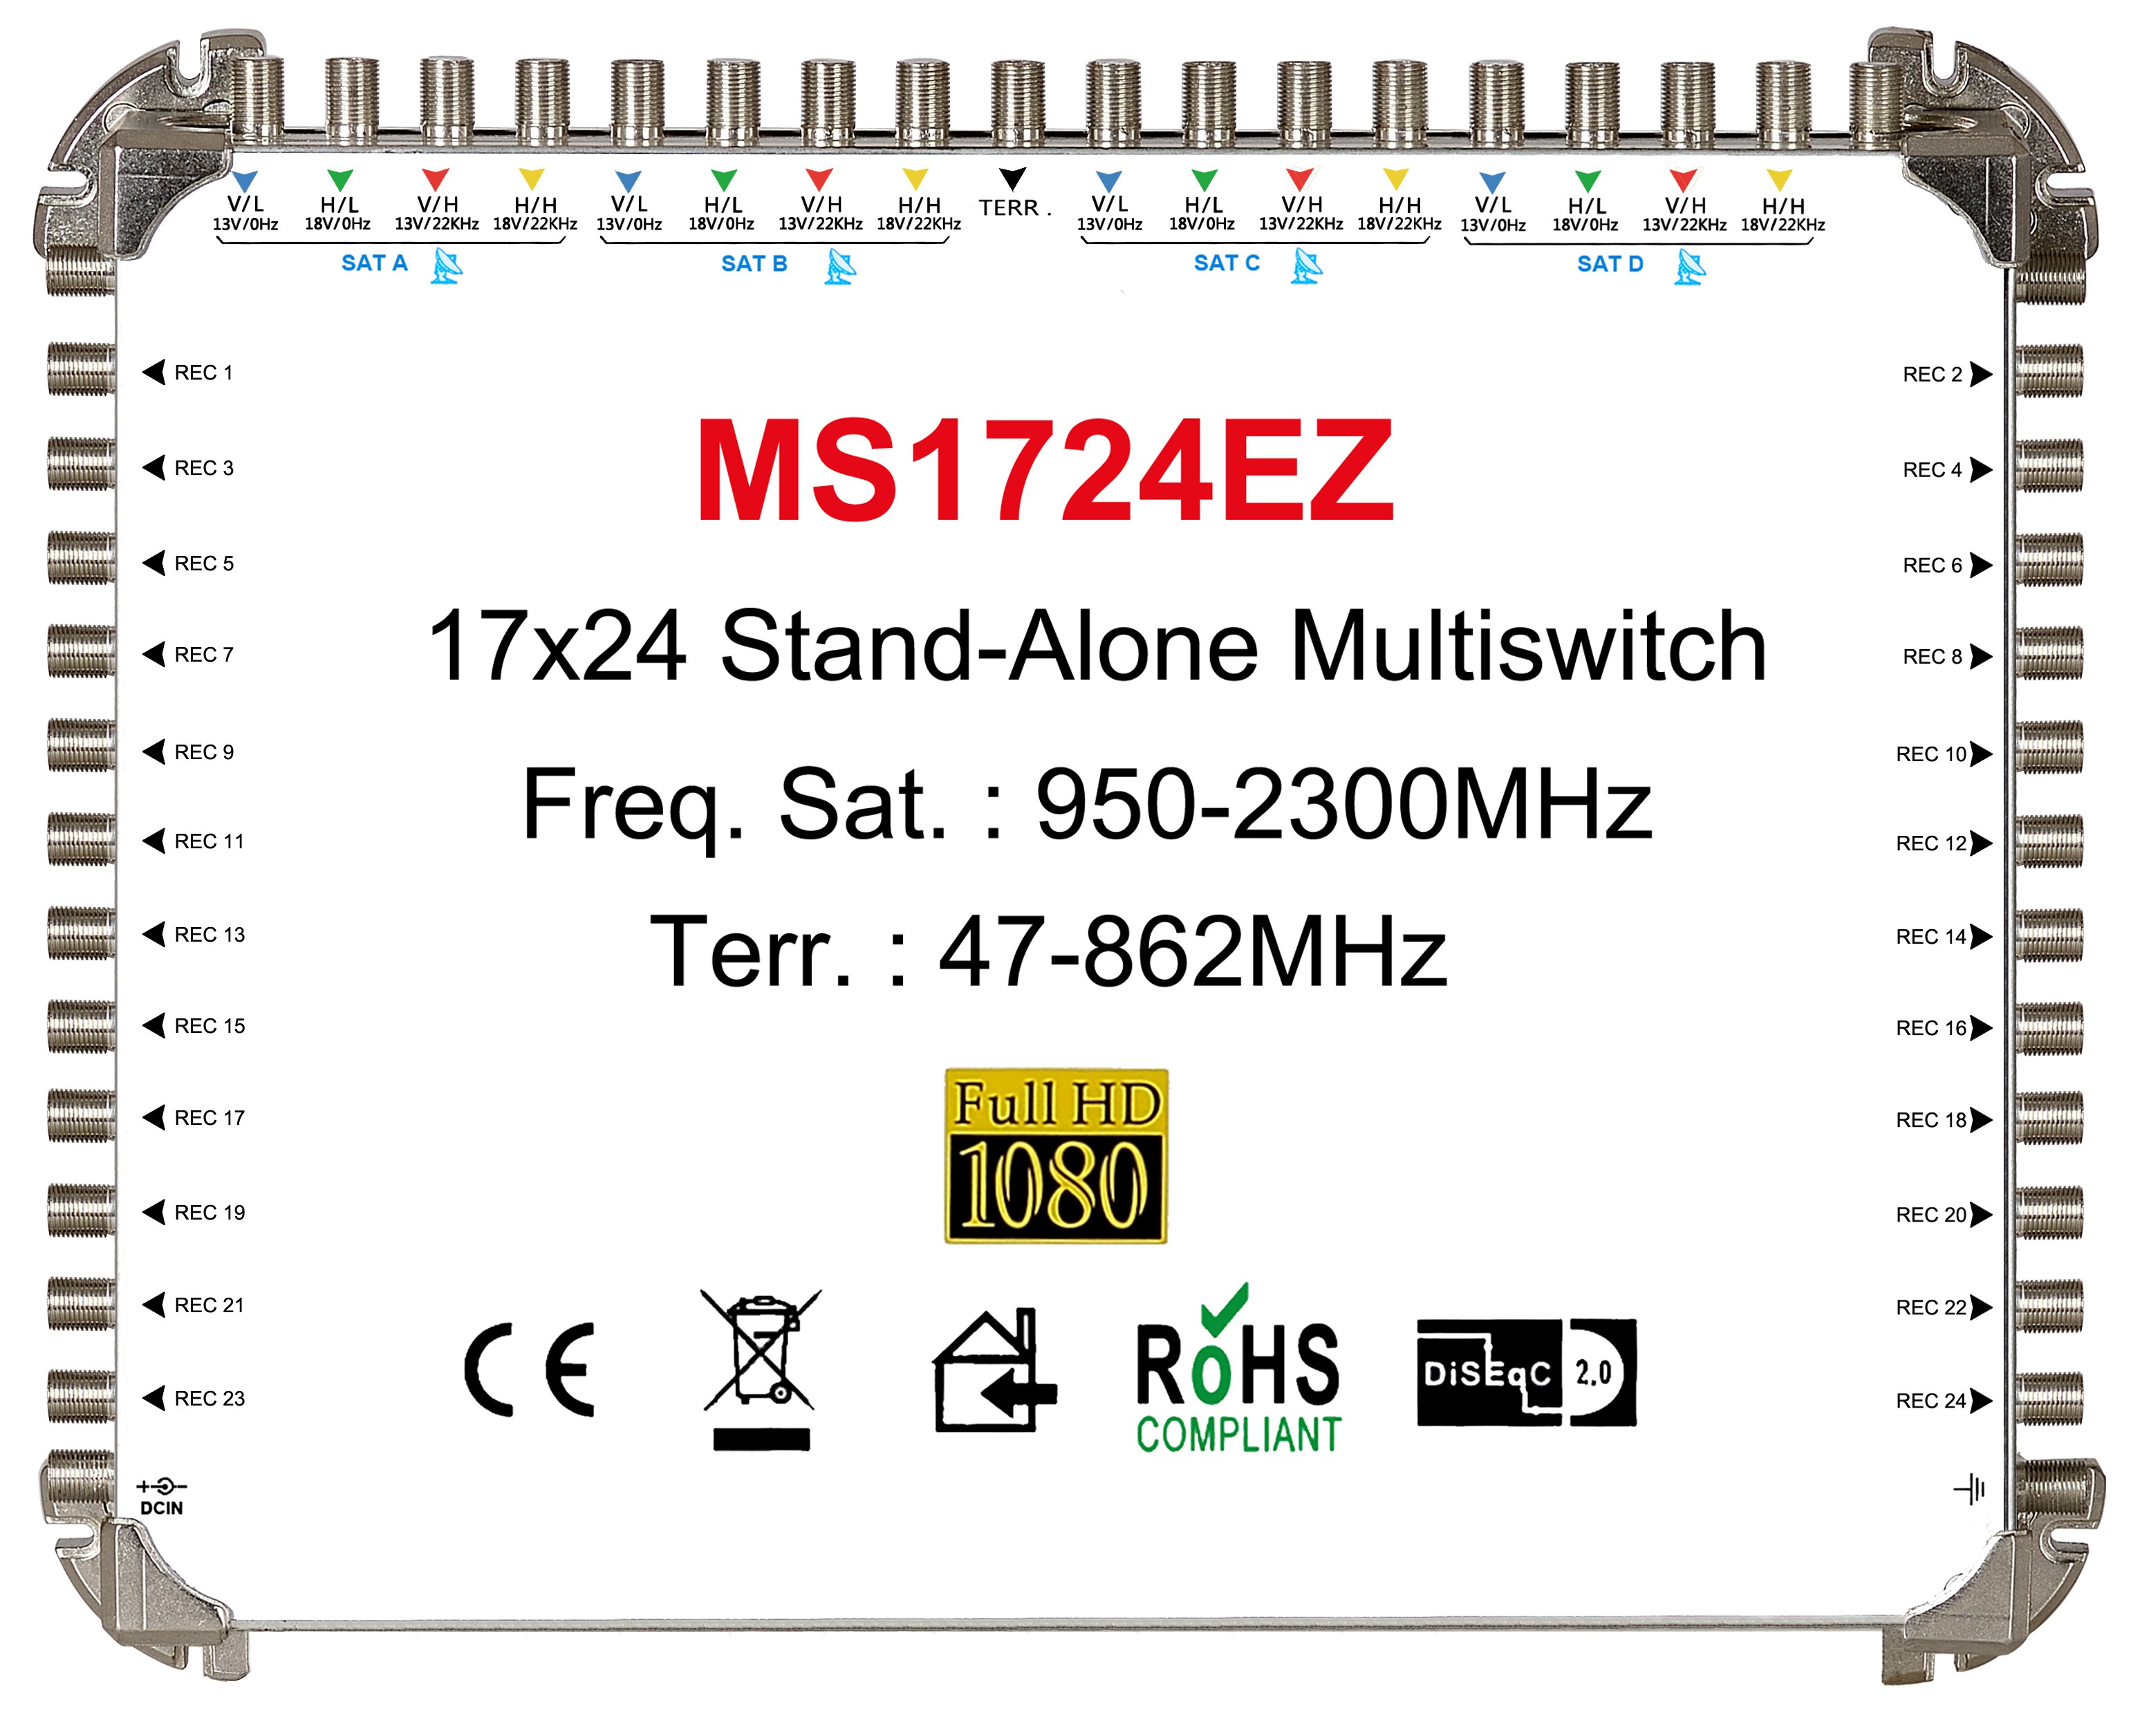 17x24 satélite multi-switch, stand-alone multiswitch